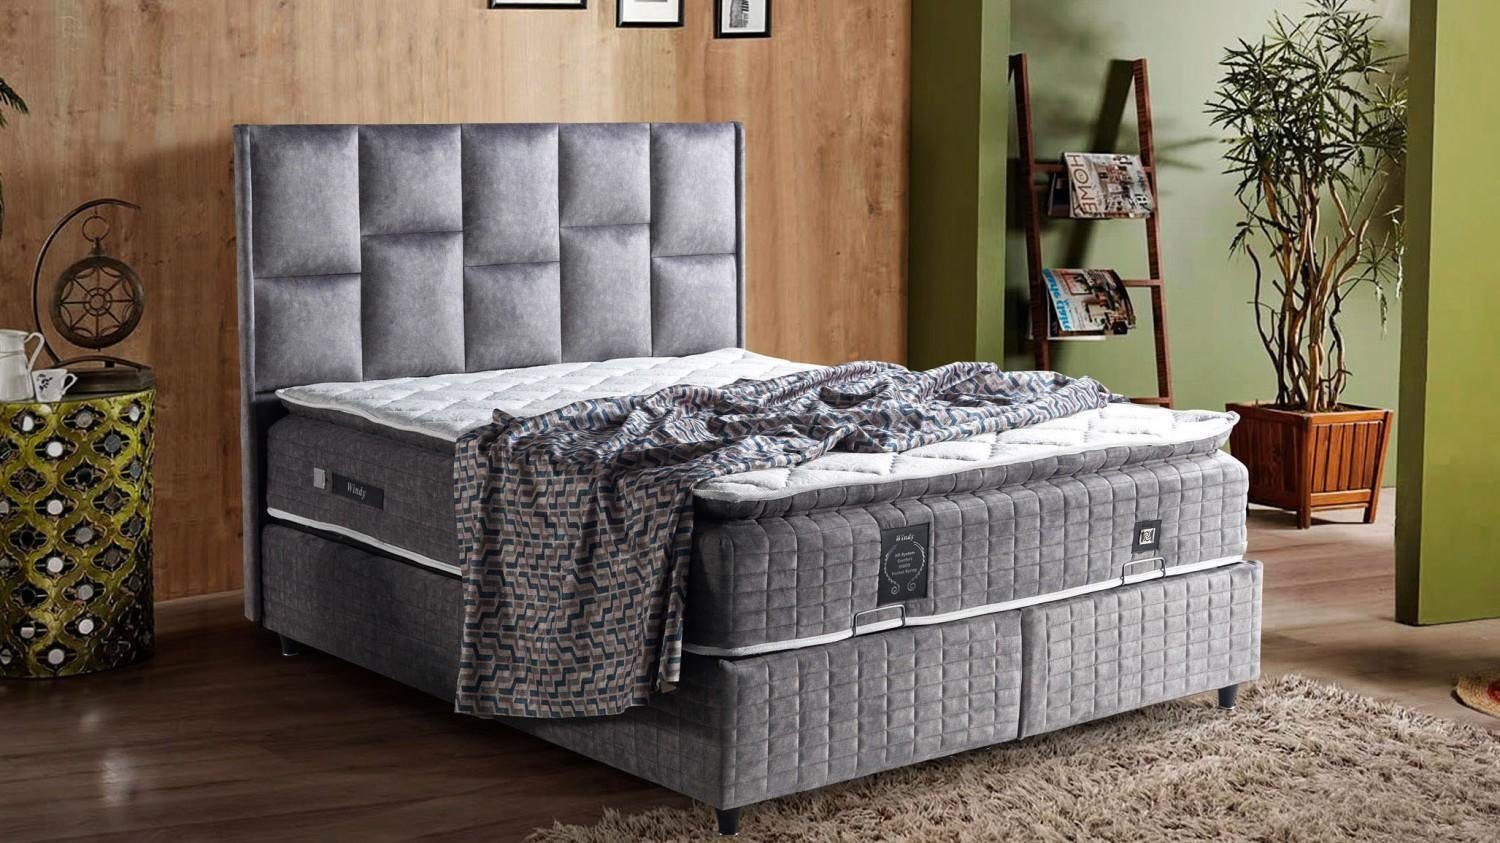 Luxus JVmoebel Europe Bett Beige (Bett), Silber In Schlafzimmer Design Bett Polster Betten Möbel Made